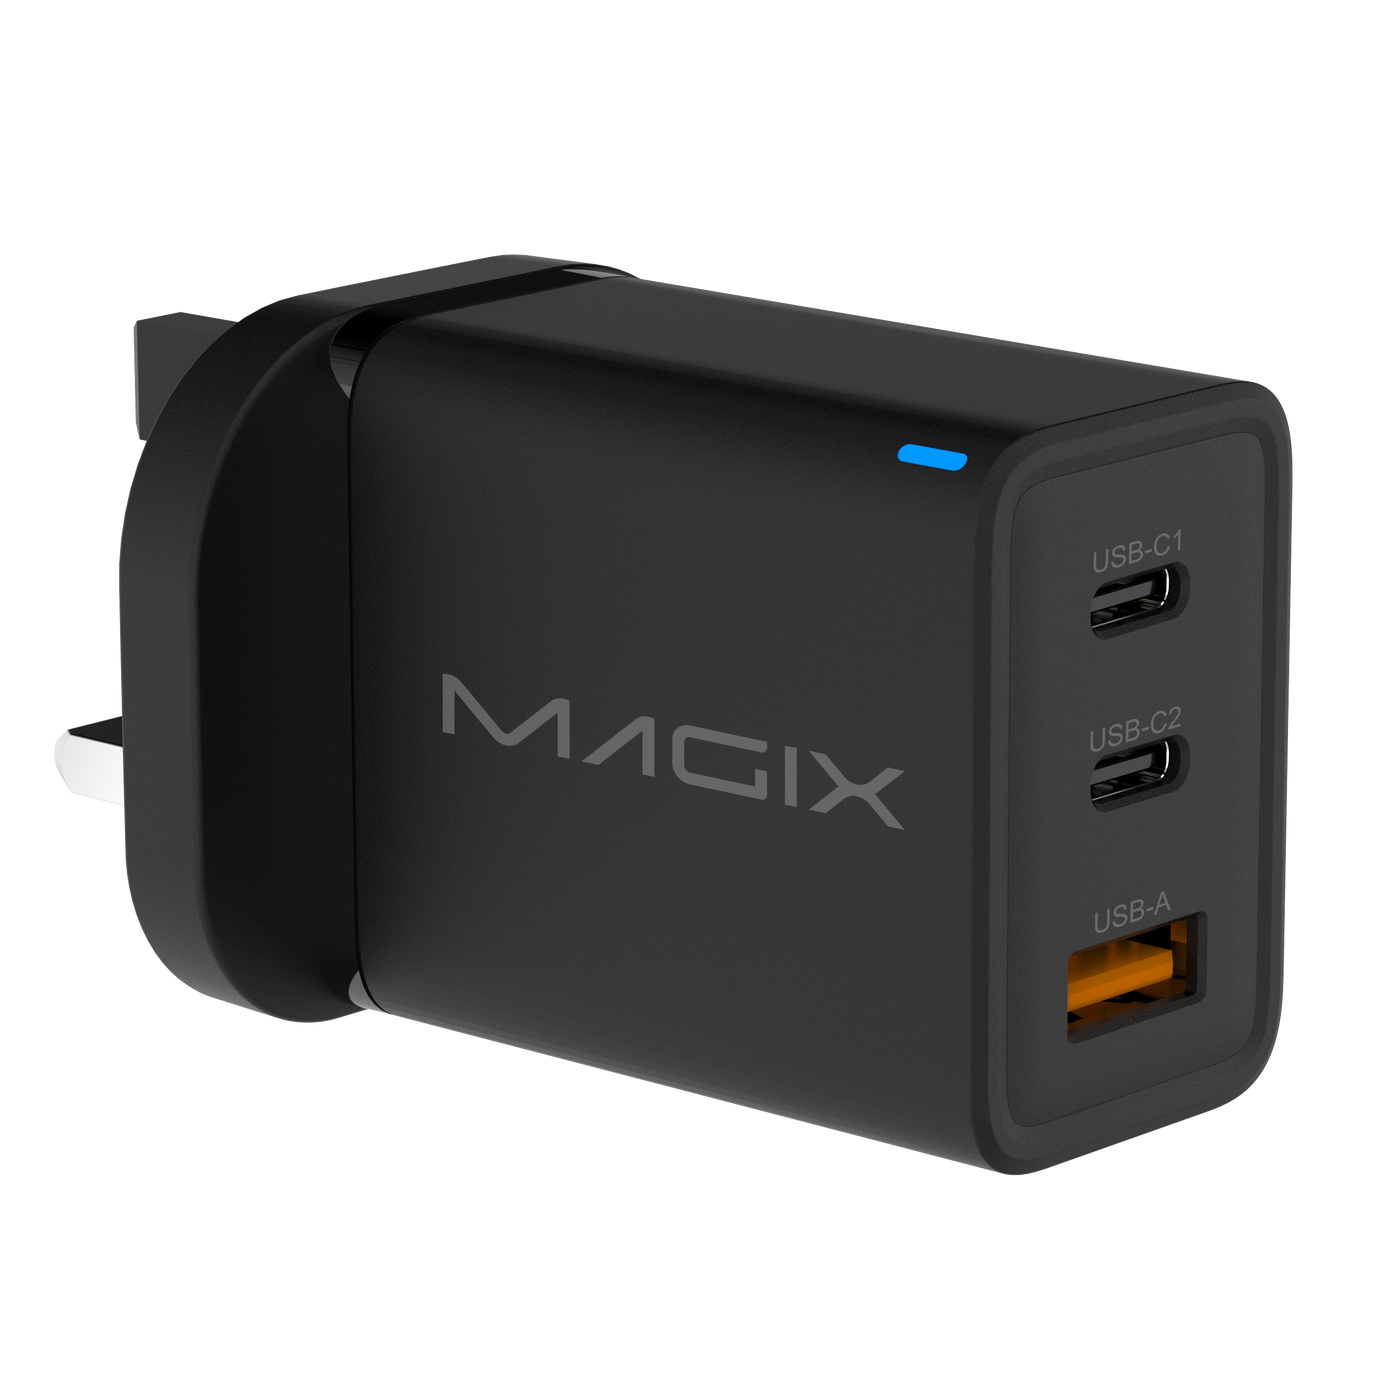 MAGIX 65W 3-Port Plug GaN Charger PD Power Delivery - UK Plug